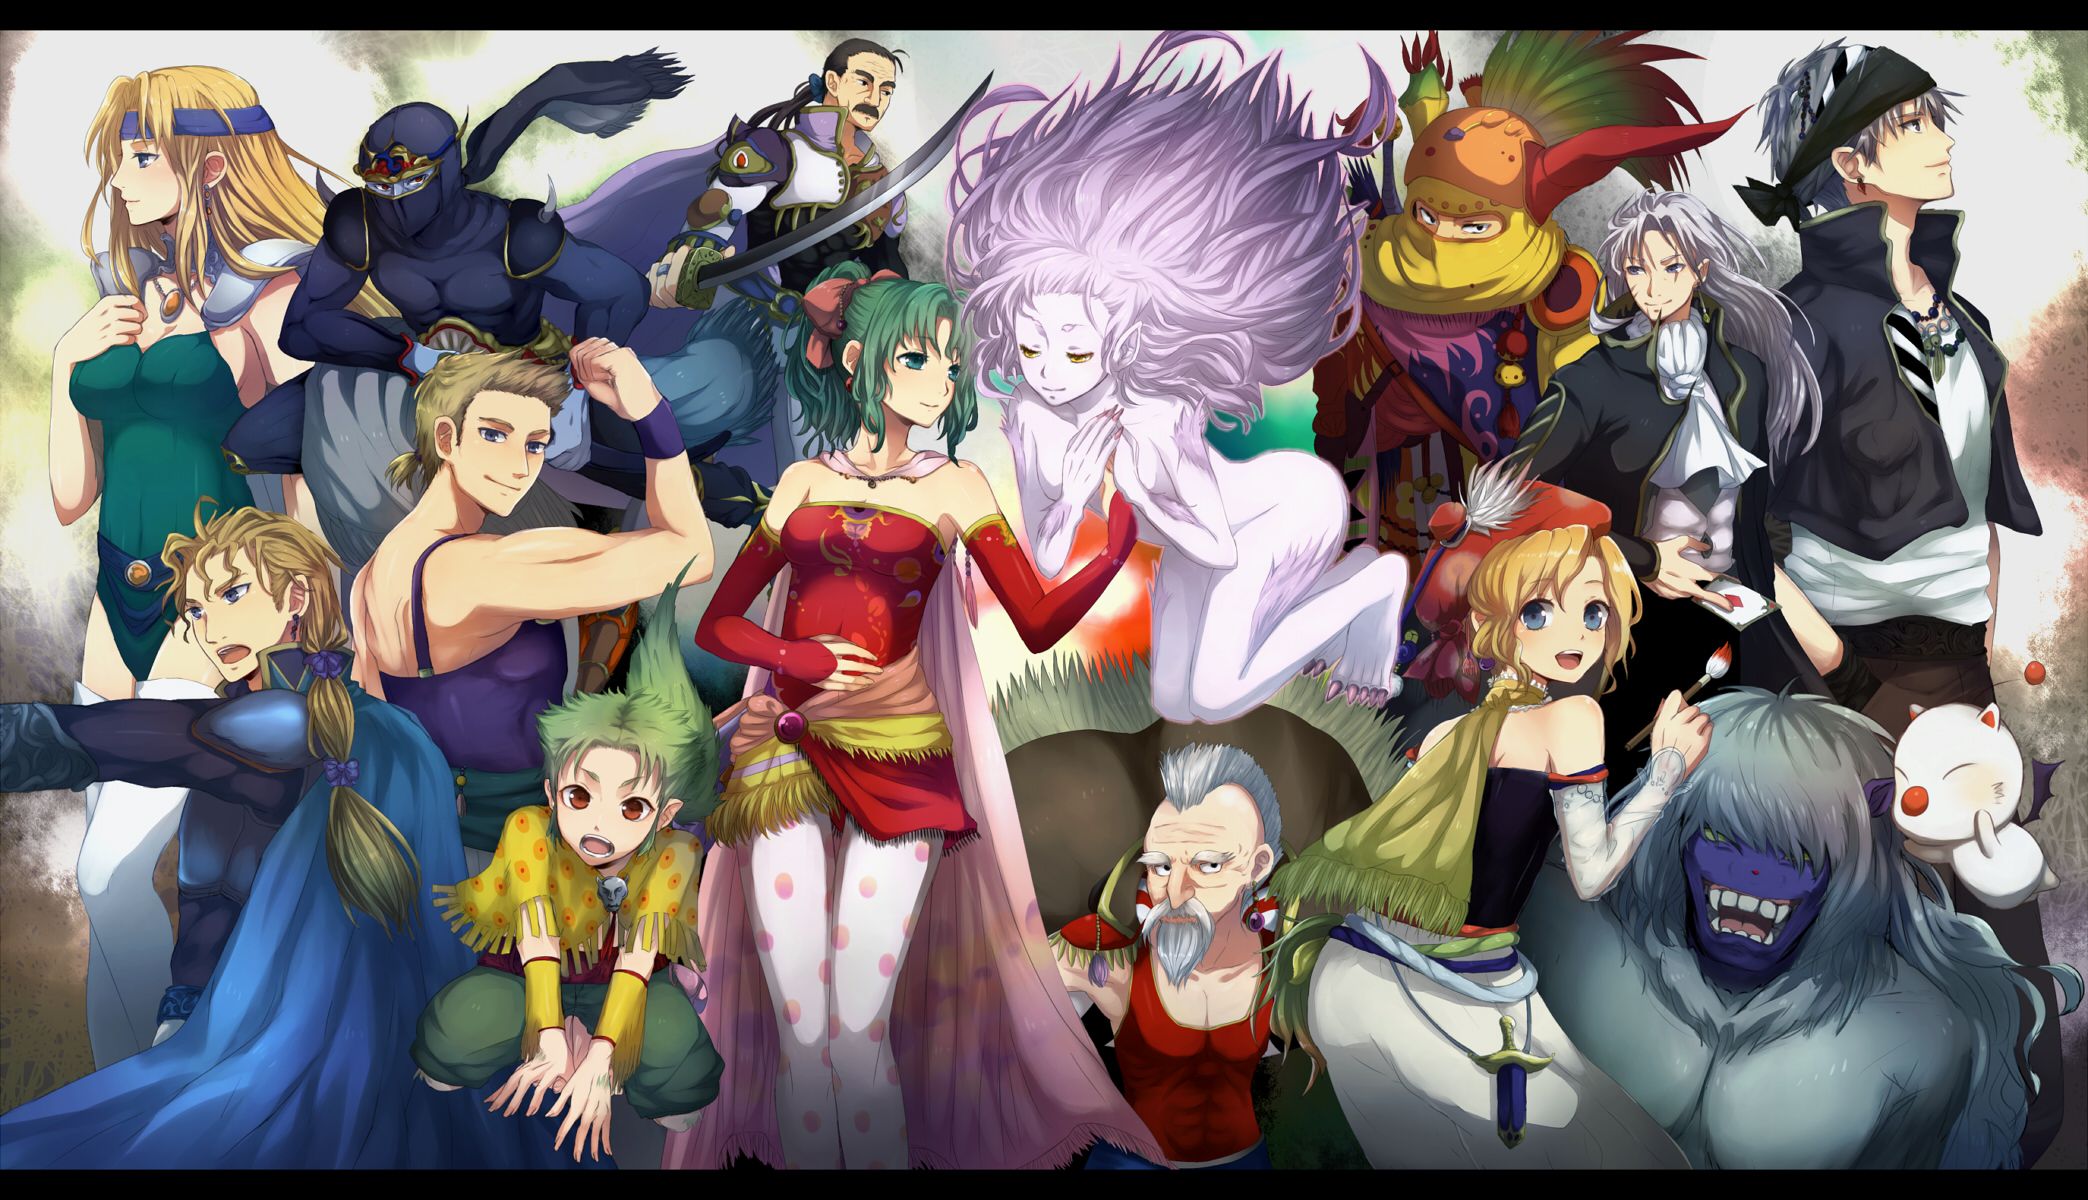 Final Fantasy 6 Wallpaper. Final fantasy vi, Final fantasy artwork, Final fantasy chronicles